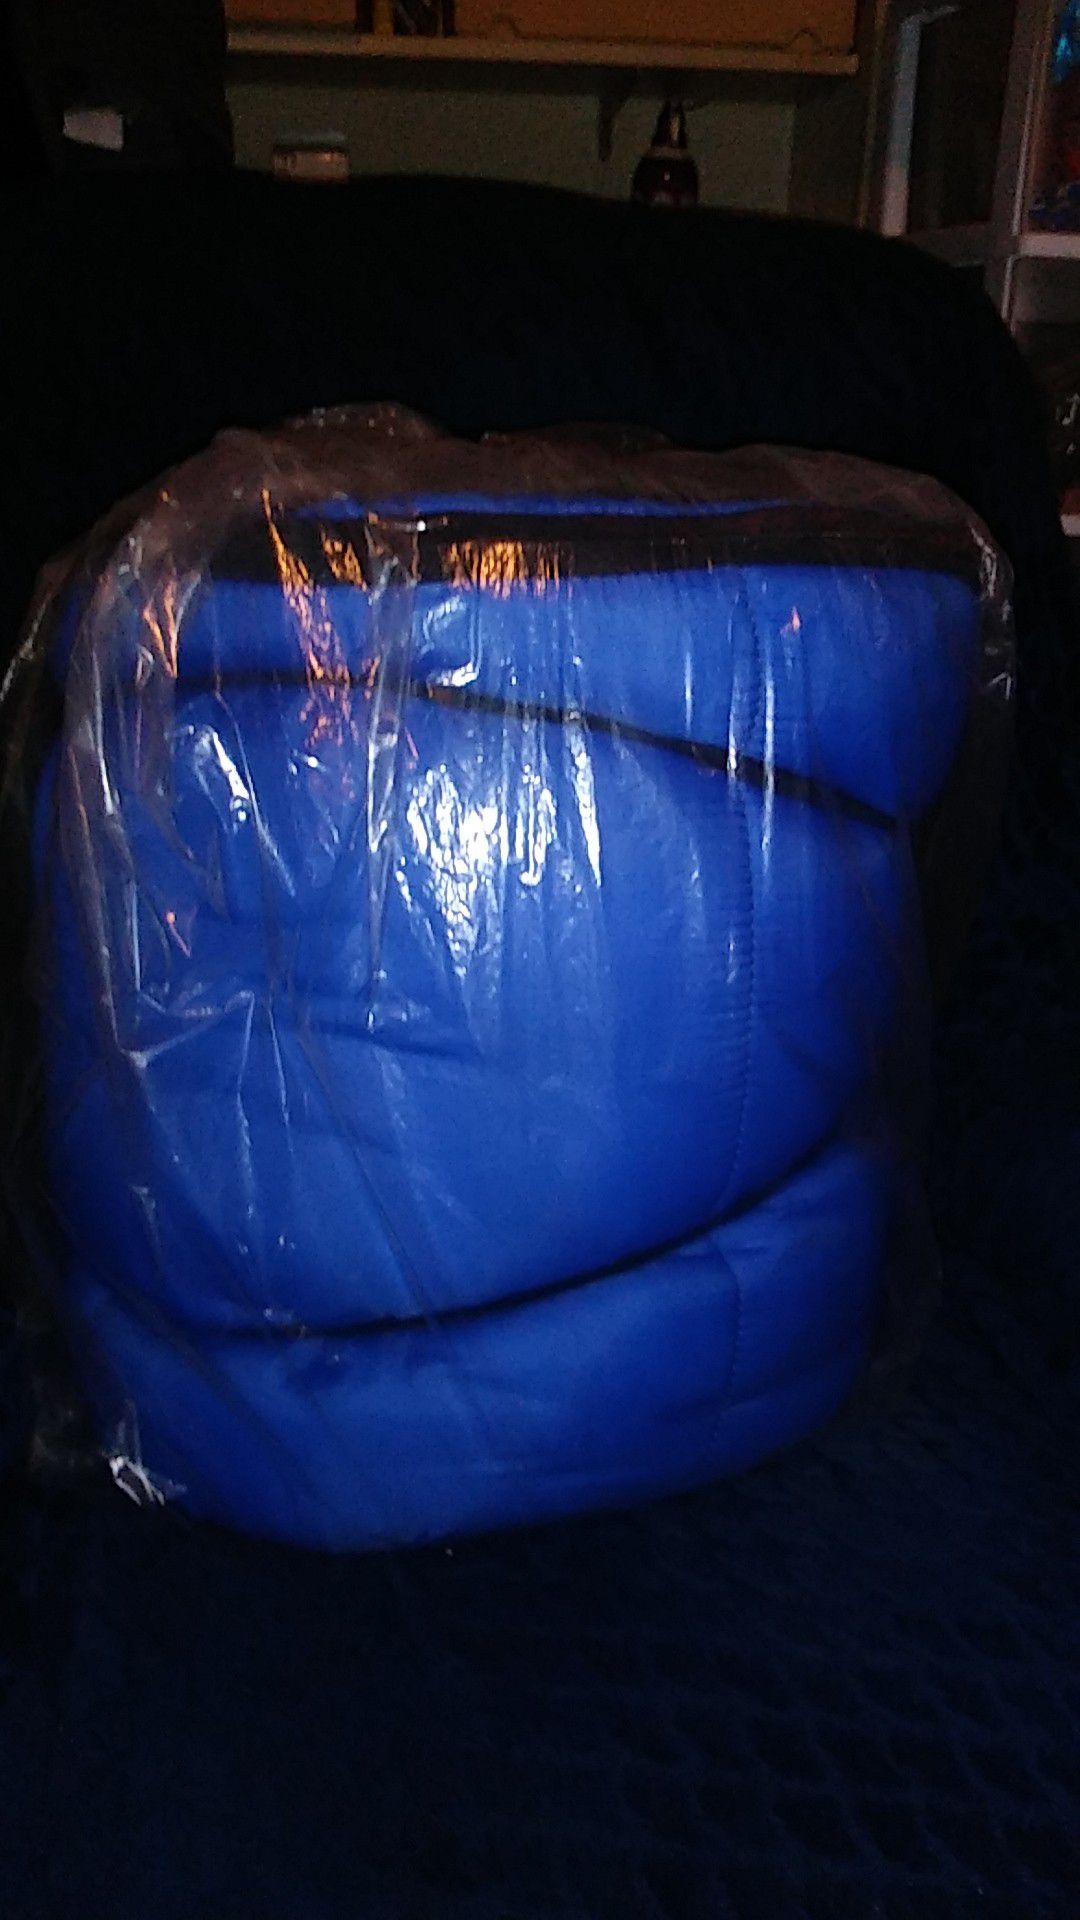 Blue sleeping bag